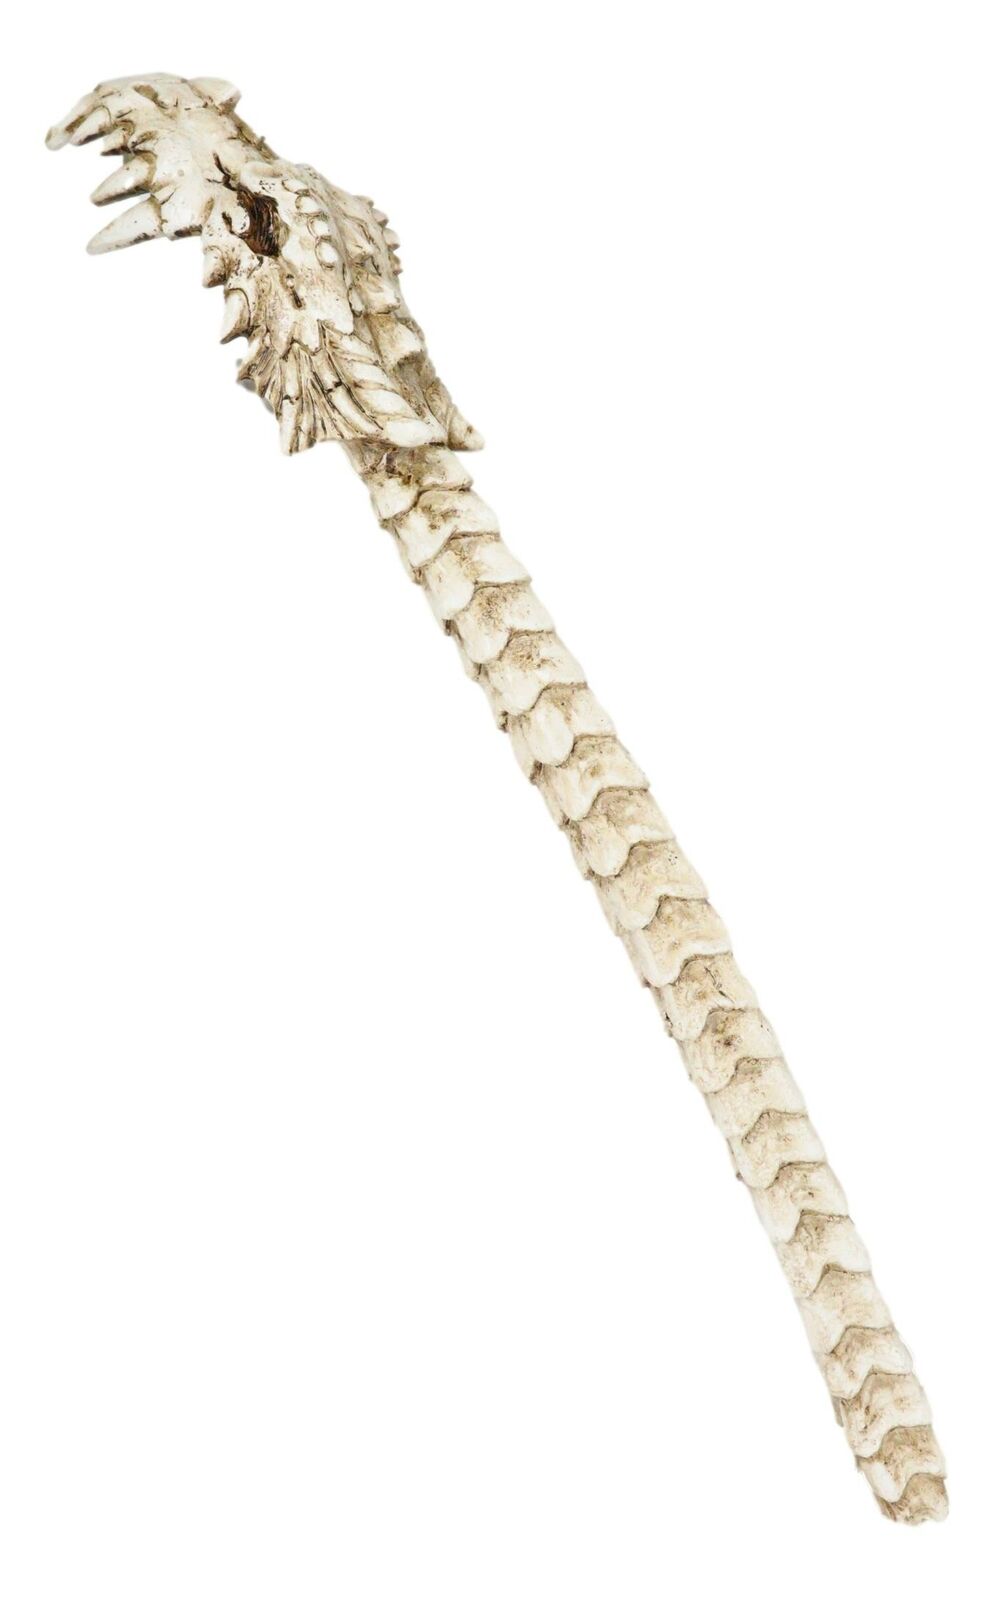 Ancient Fossil Spine Bone Skeleton Dragon Hand Back Itch Scratcher Figurine